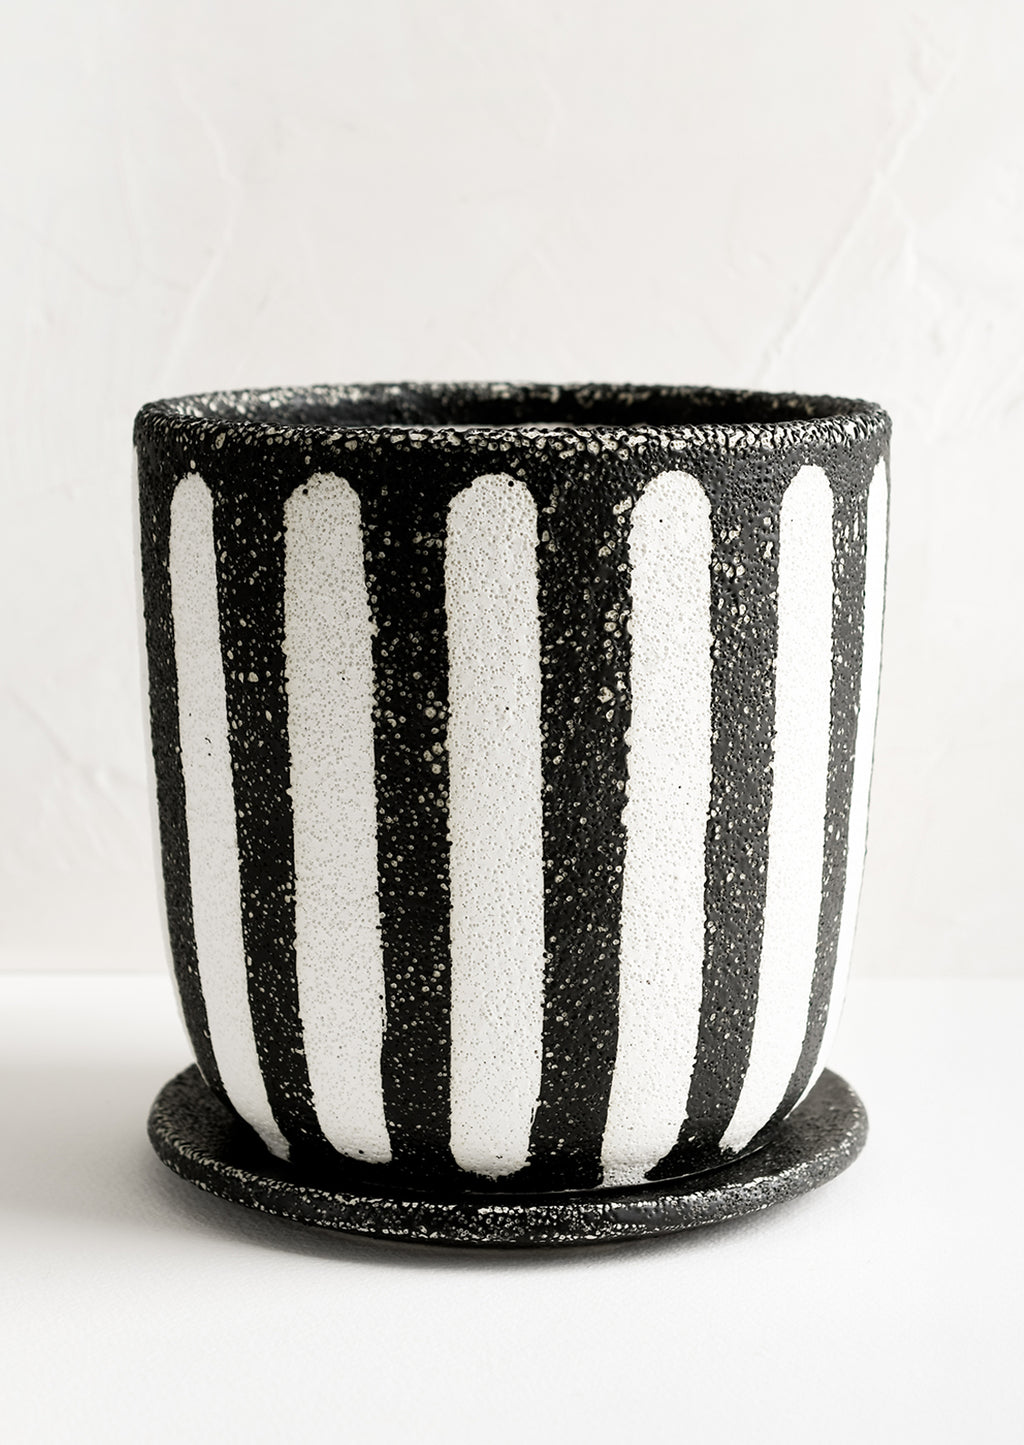 2: A black and white striped planter.